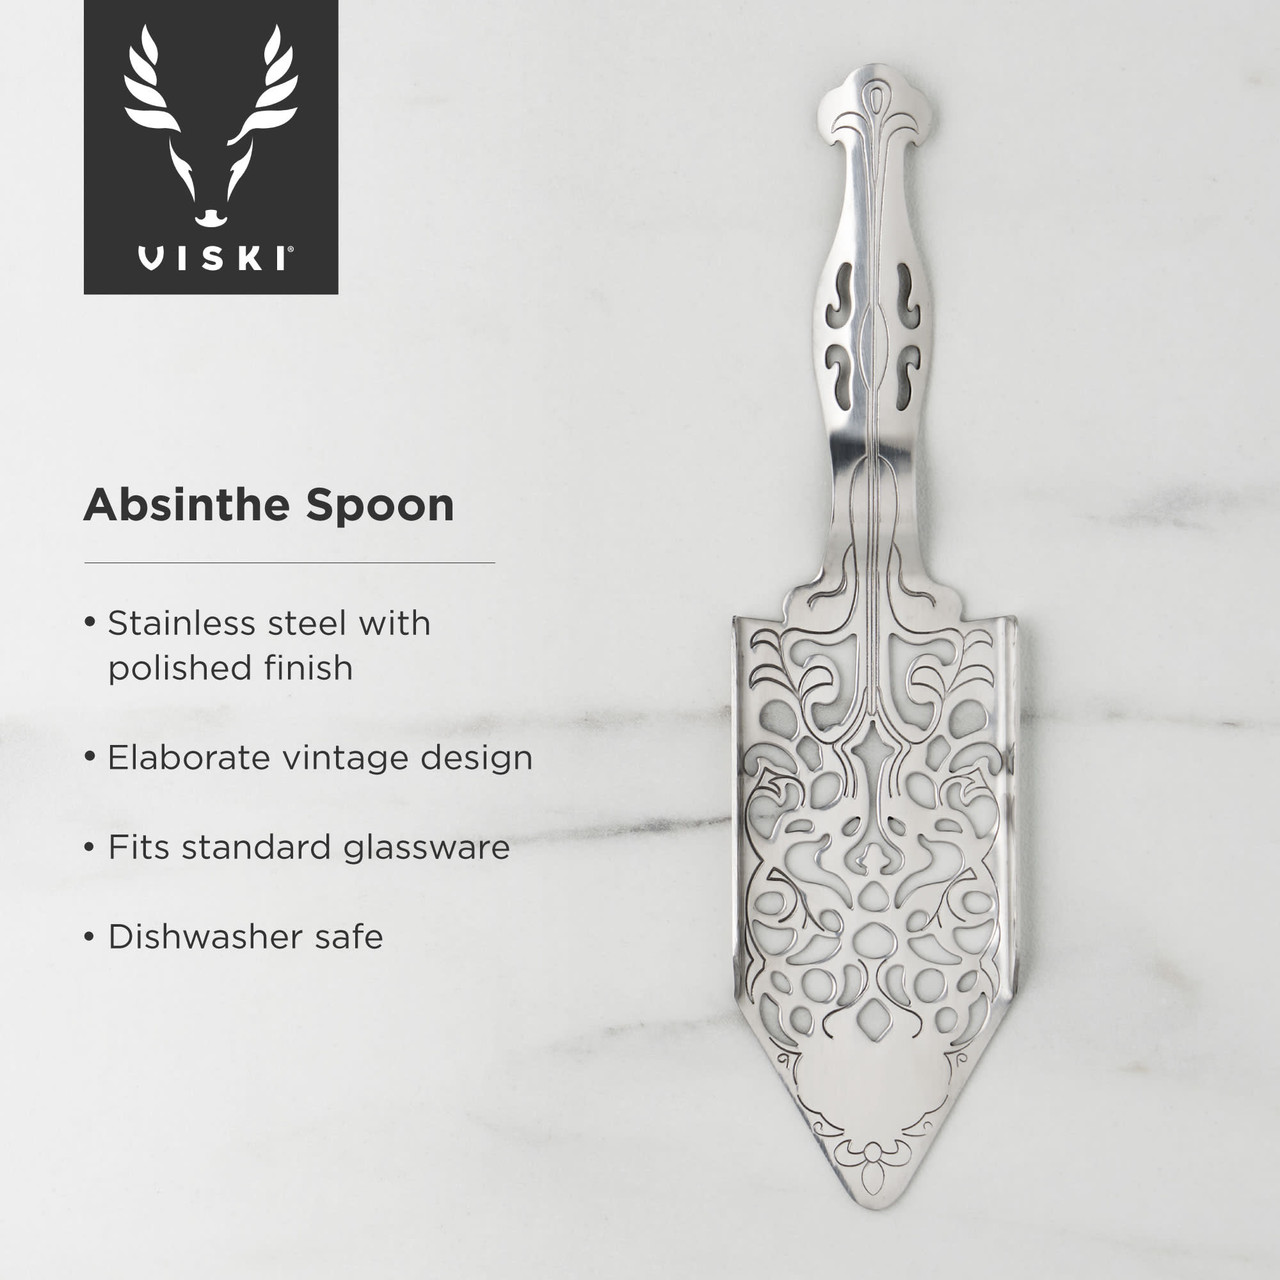 Absinthe Spoon by Viski